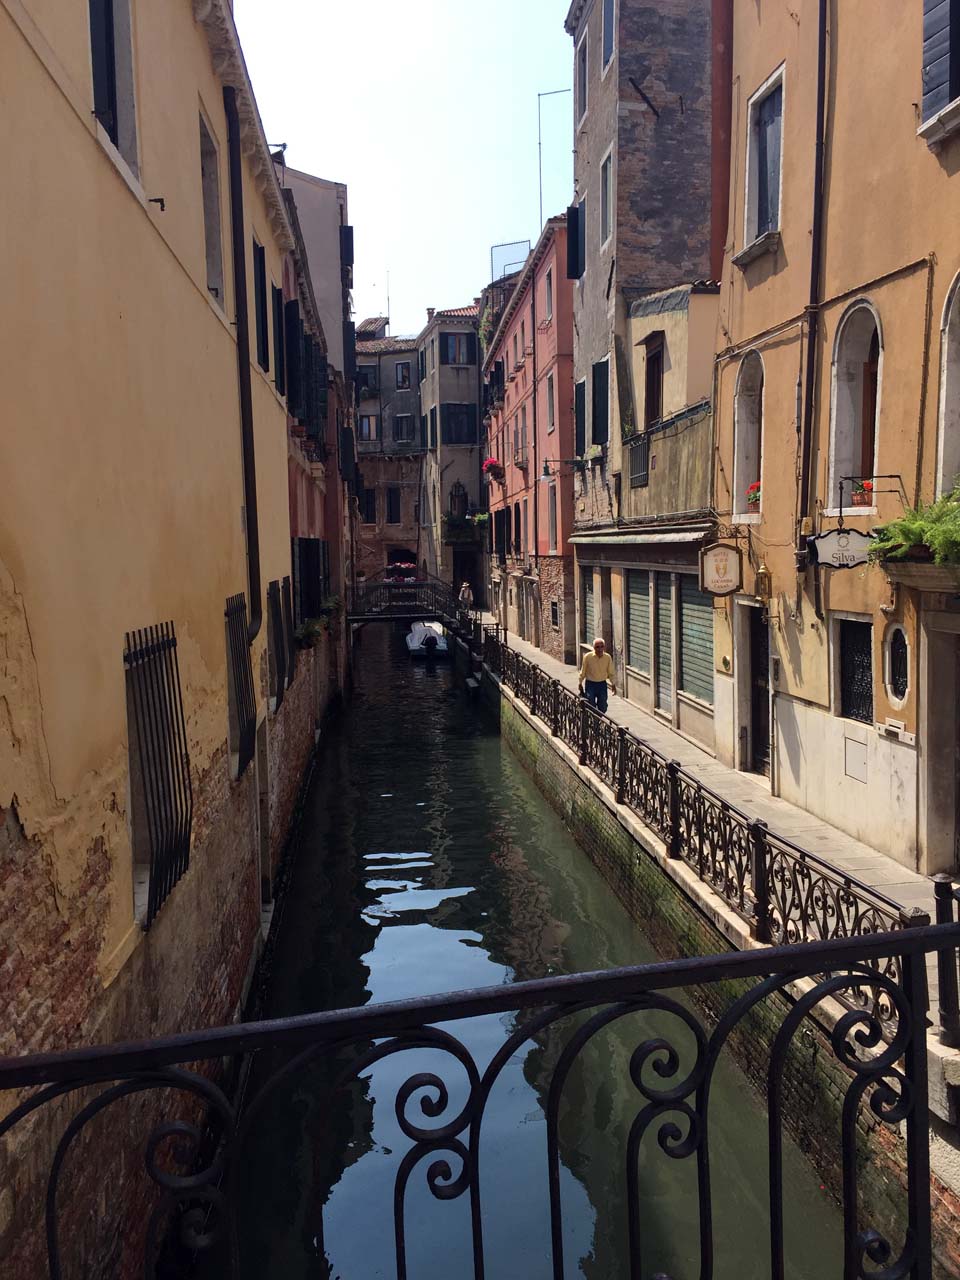 Scenes of Venice